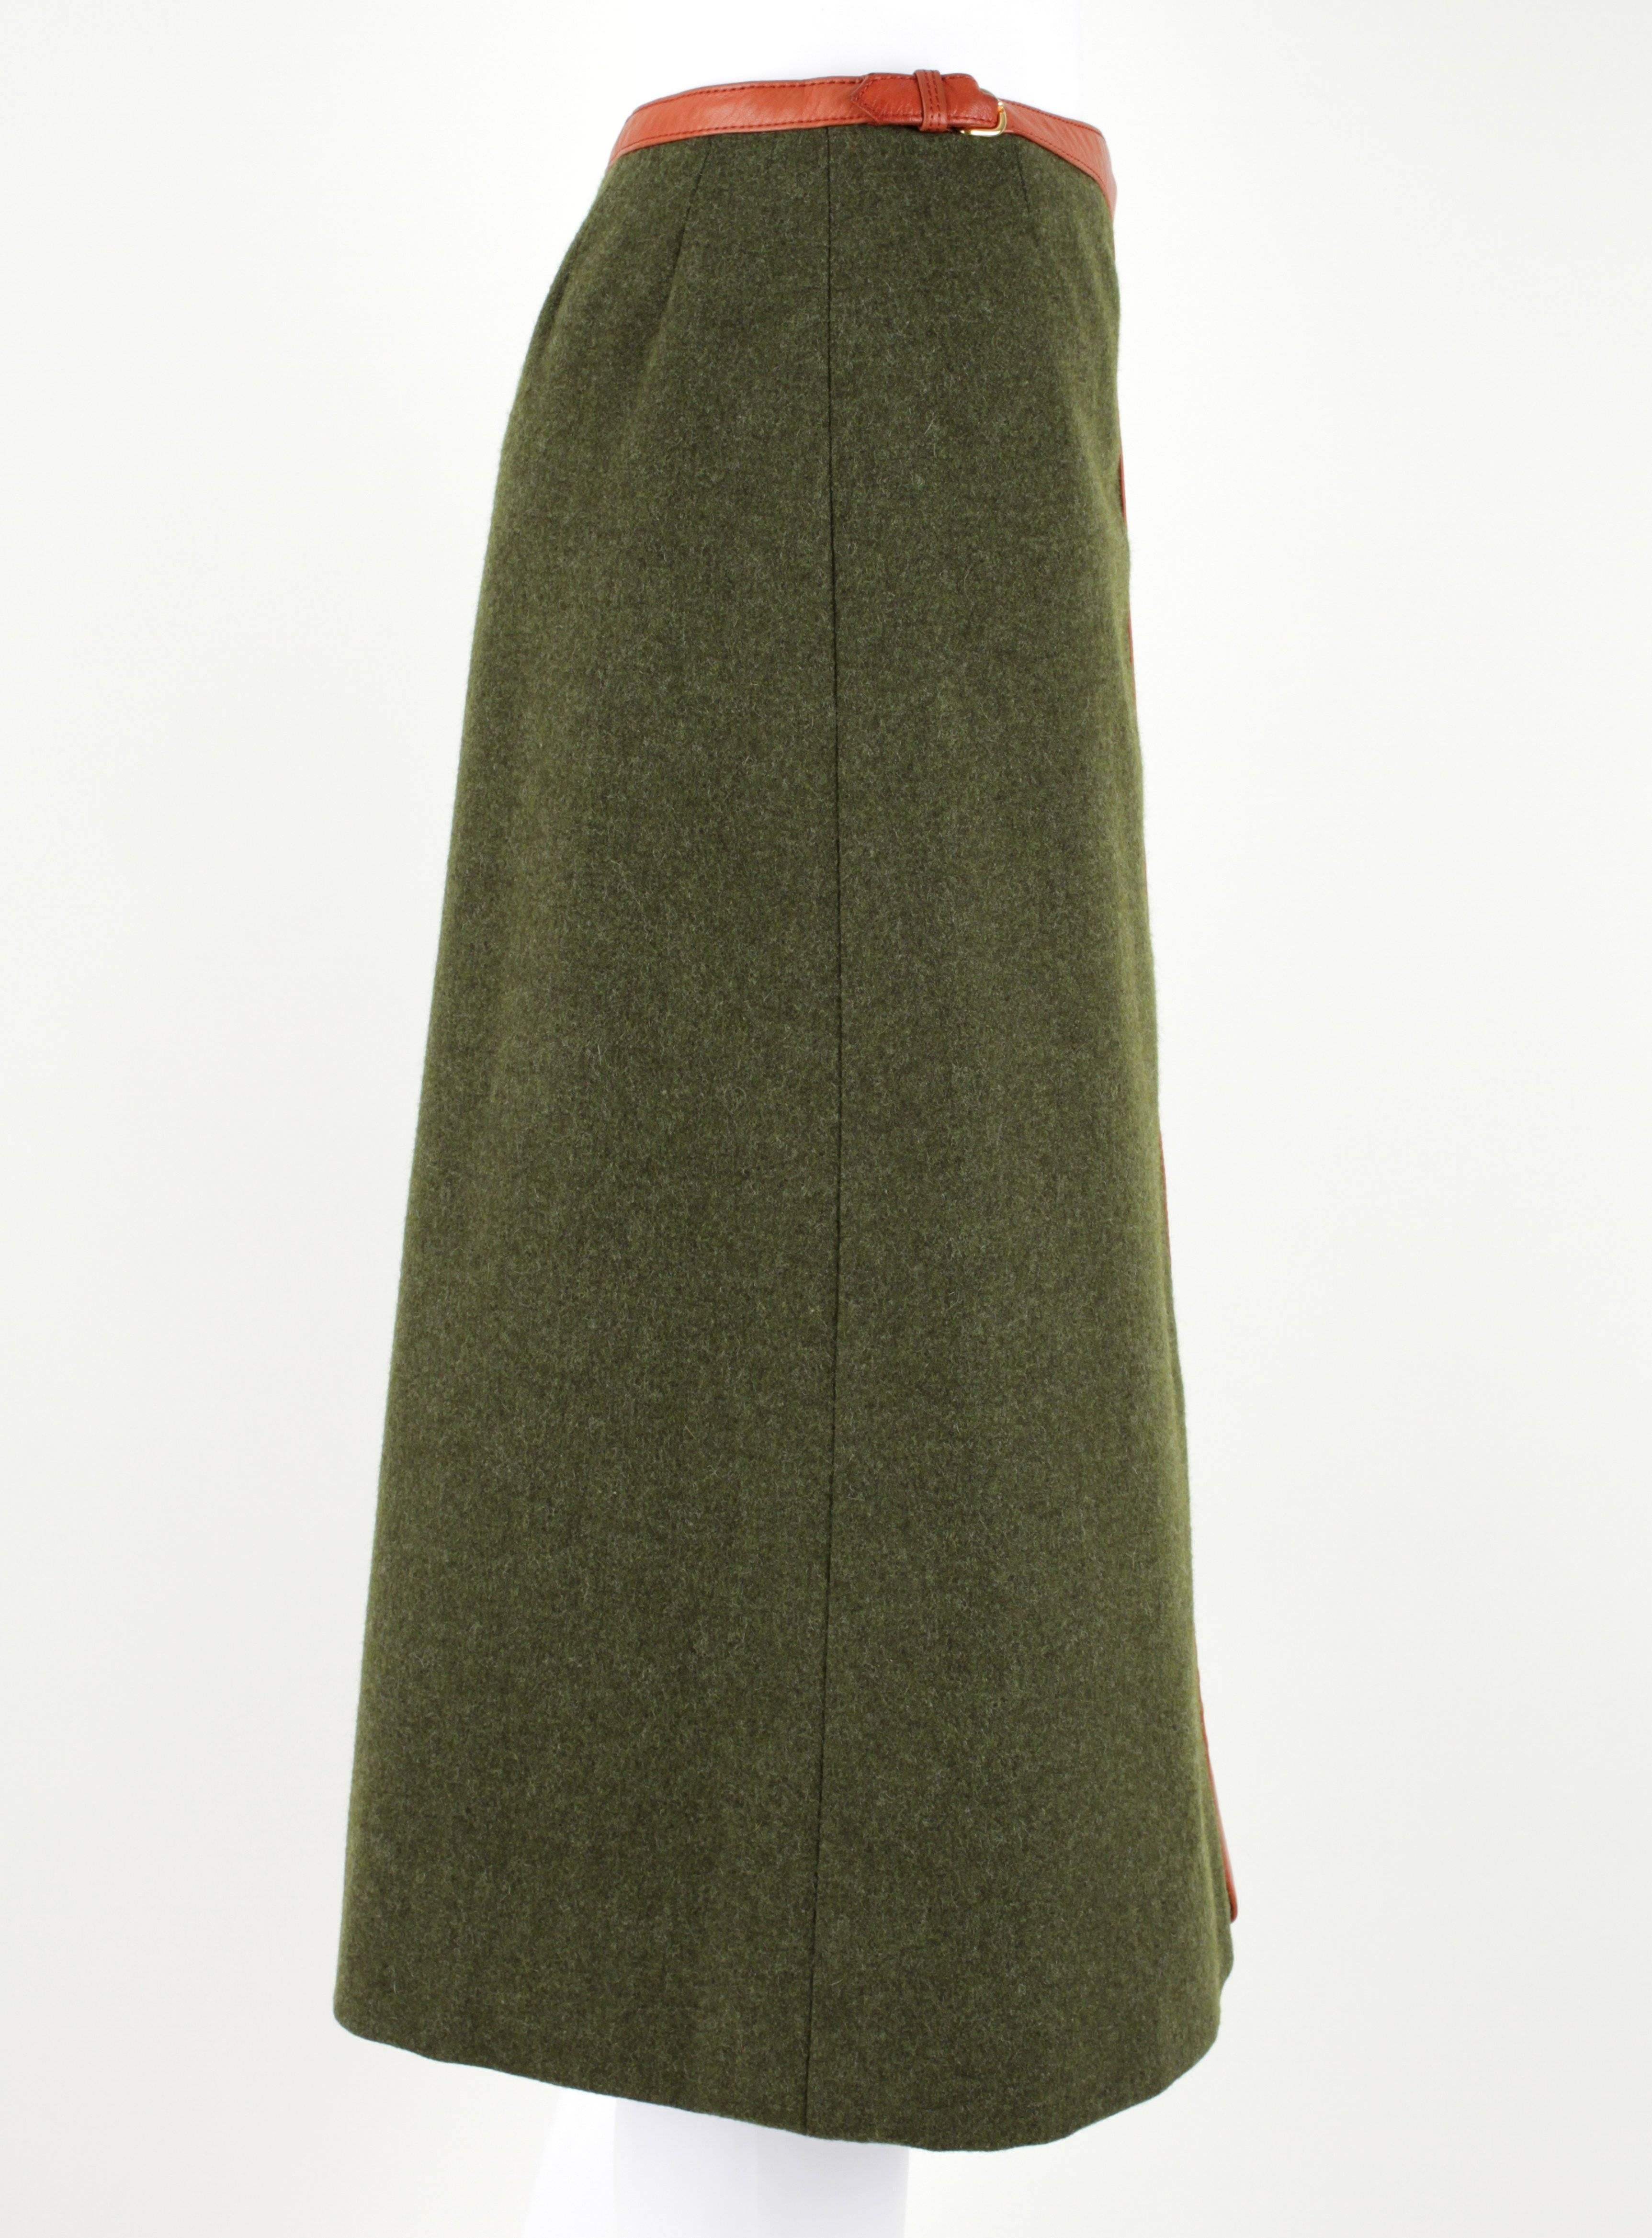 Brown HERMES SPORT c.1970s Olive Wool Wrap Skirt Genuine Lambskin Leather Trim Size 40